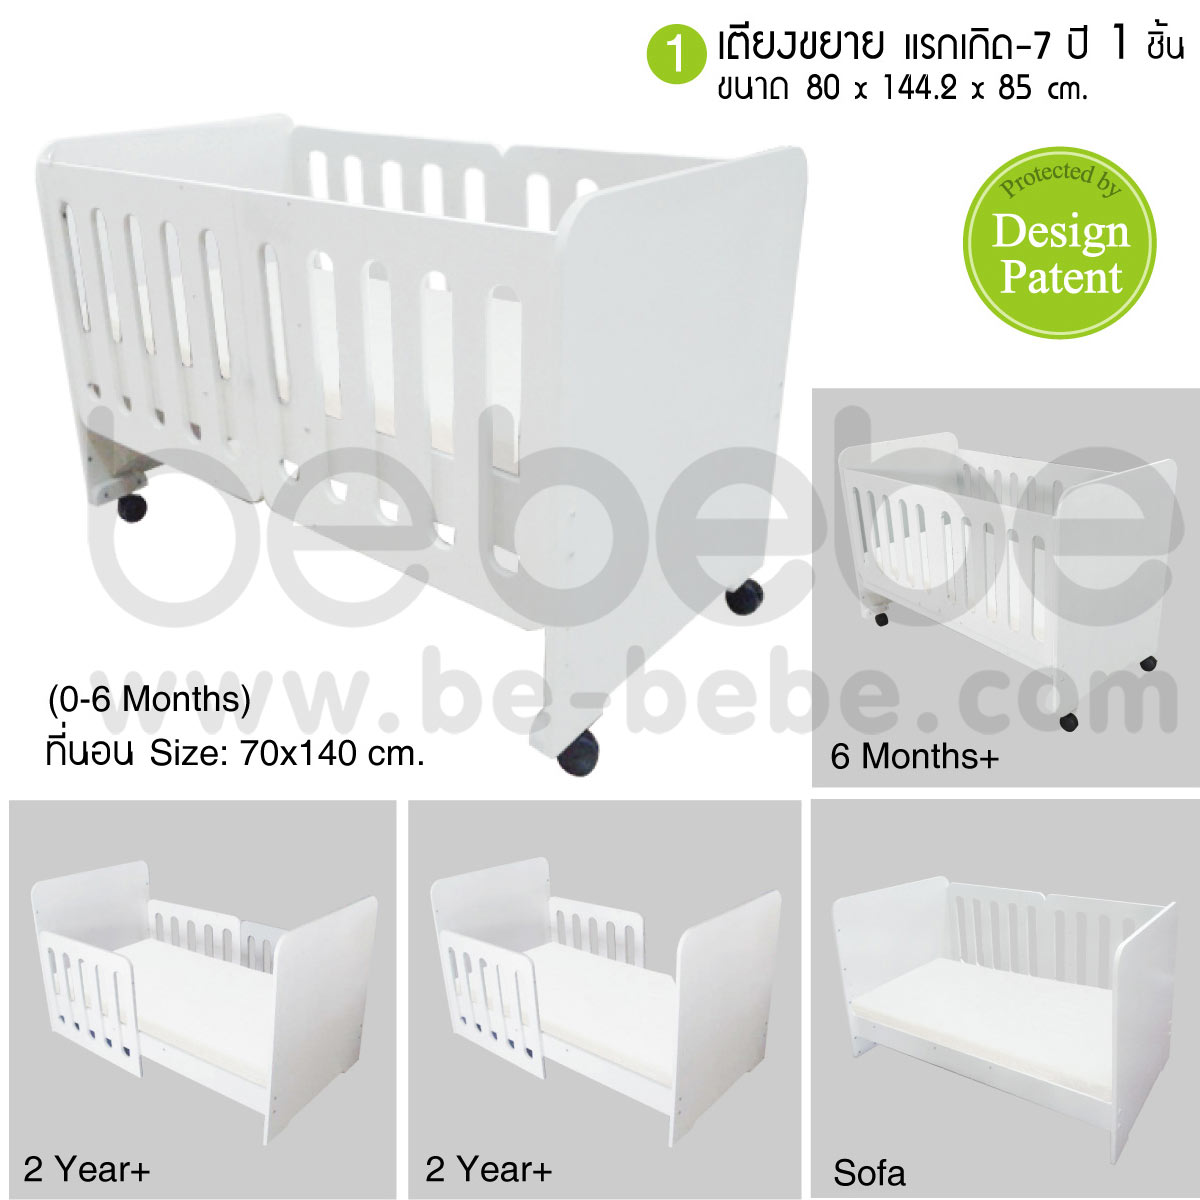 be bebe :ชุดเตียงเด็กแรกเกิด-7ปี (70x140)ปรับเป็นโซฟาได้+ที่นอนฟองน้ำ+ชุดเครื่องนอน /ขาว